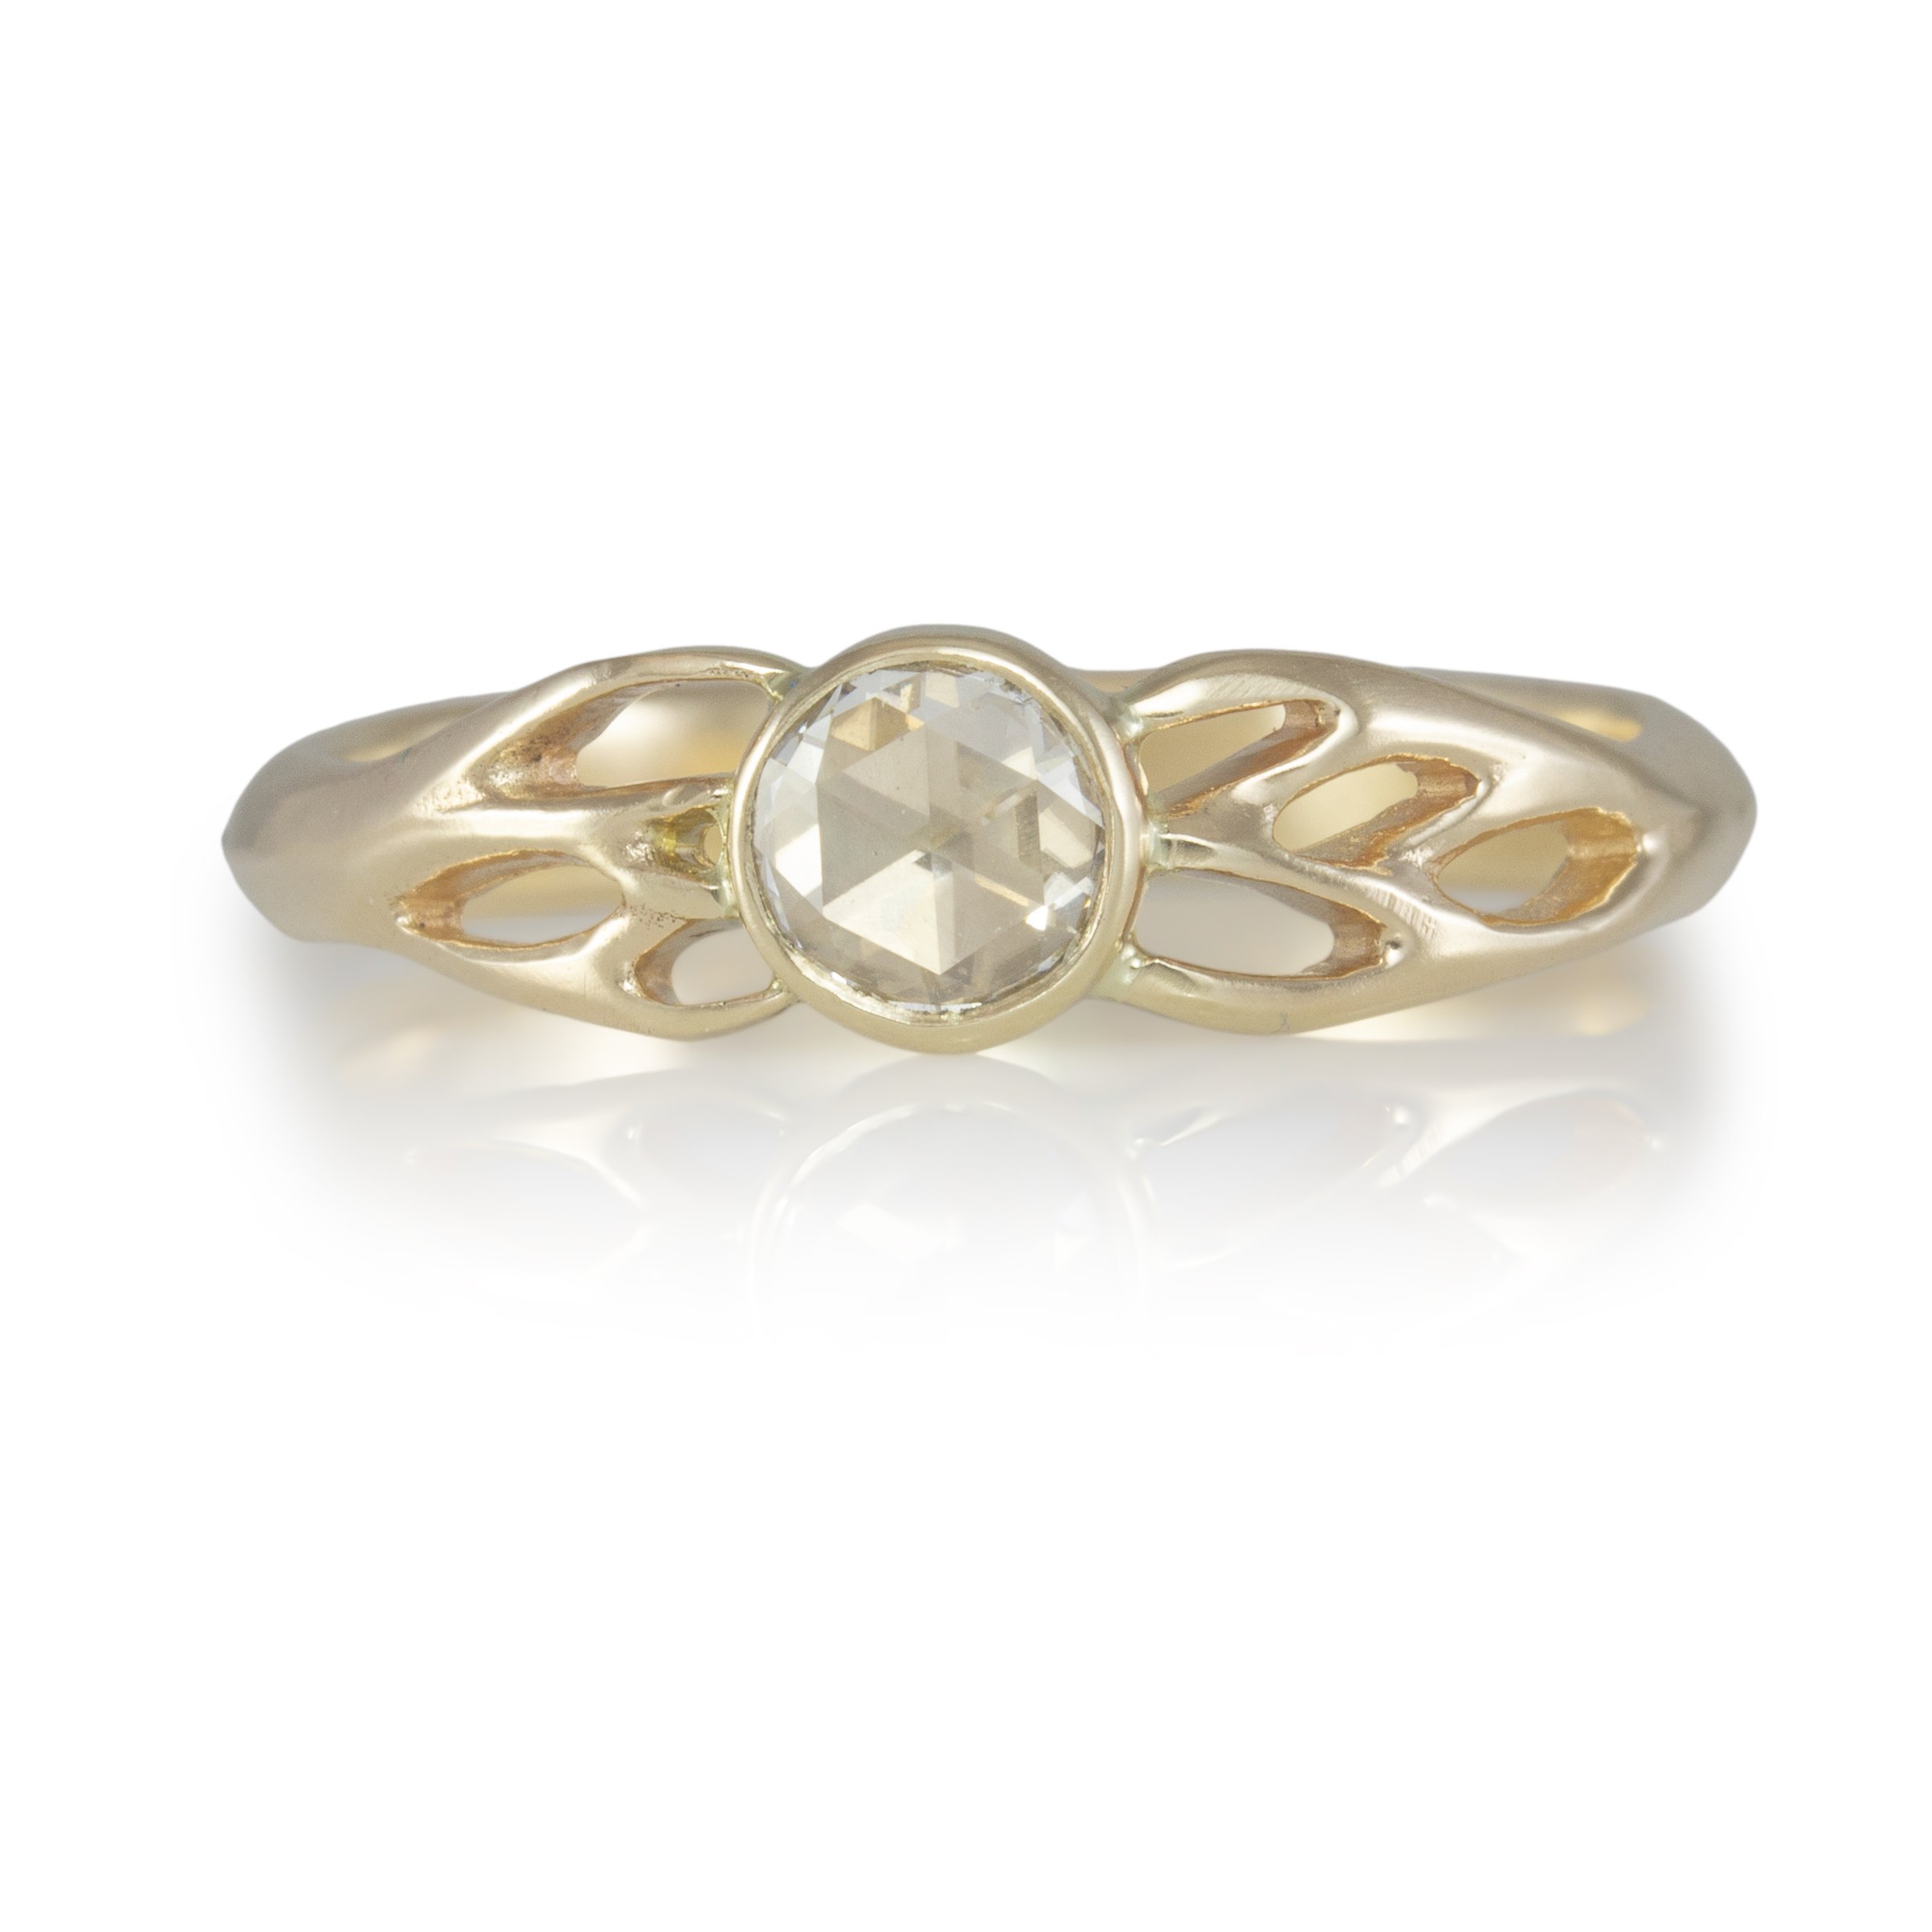 R018 Large Branch Ring 5mm rose cut diamond.jpg